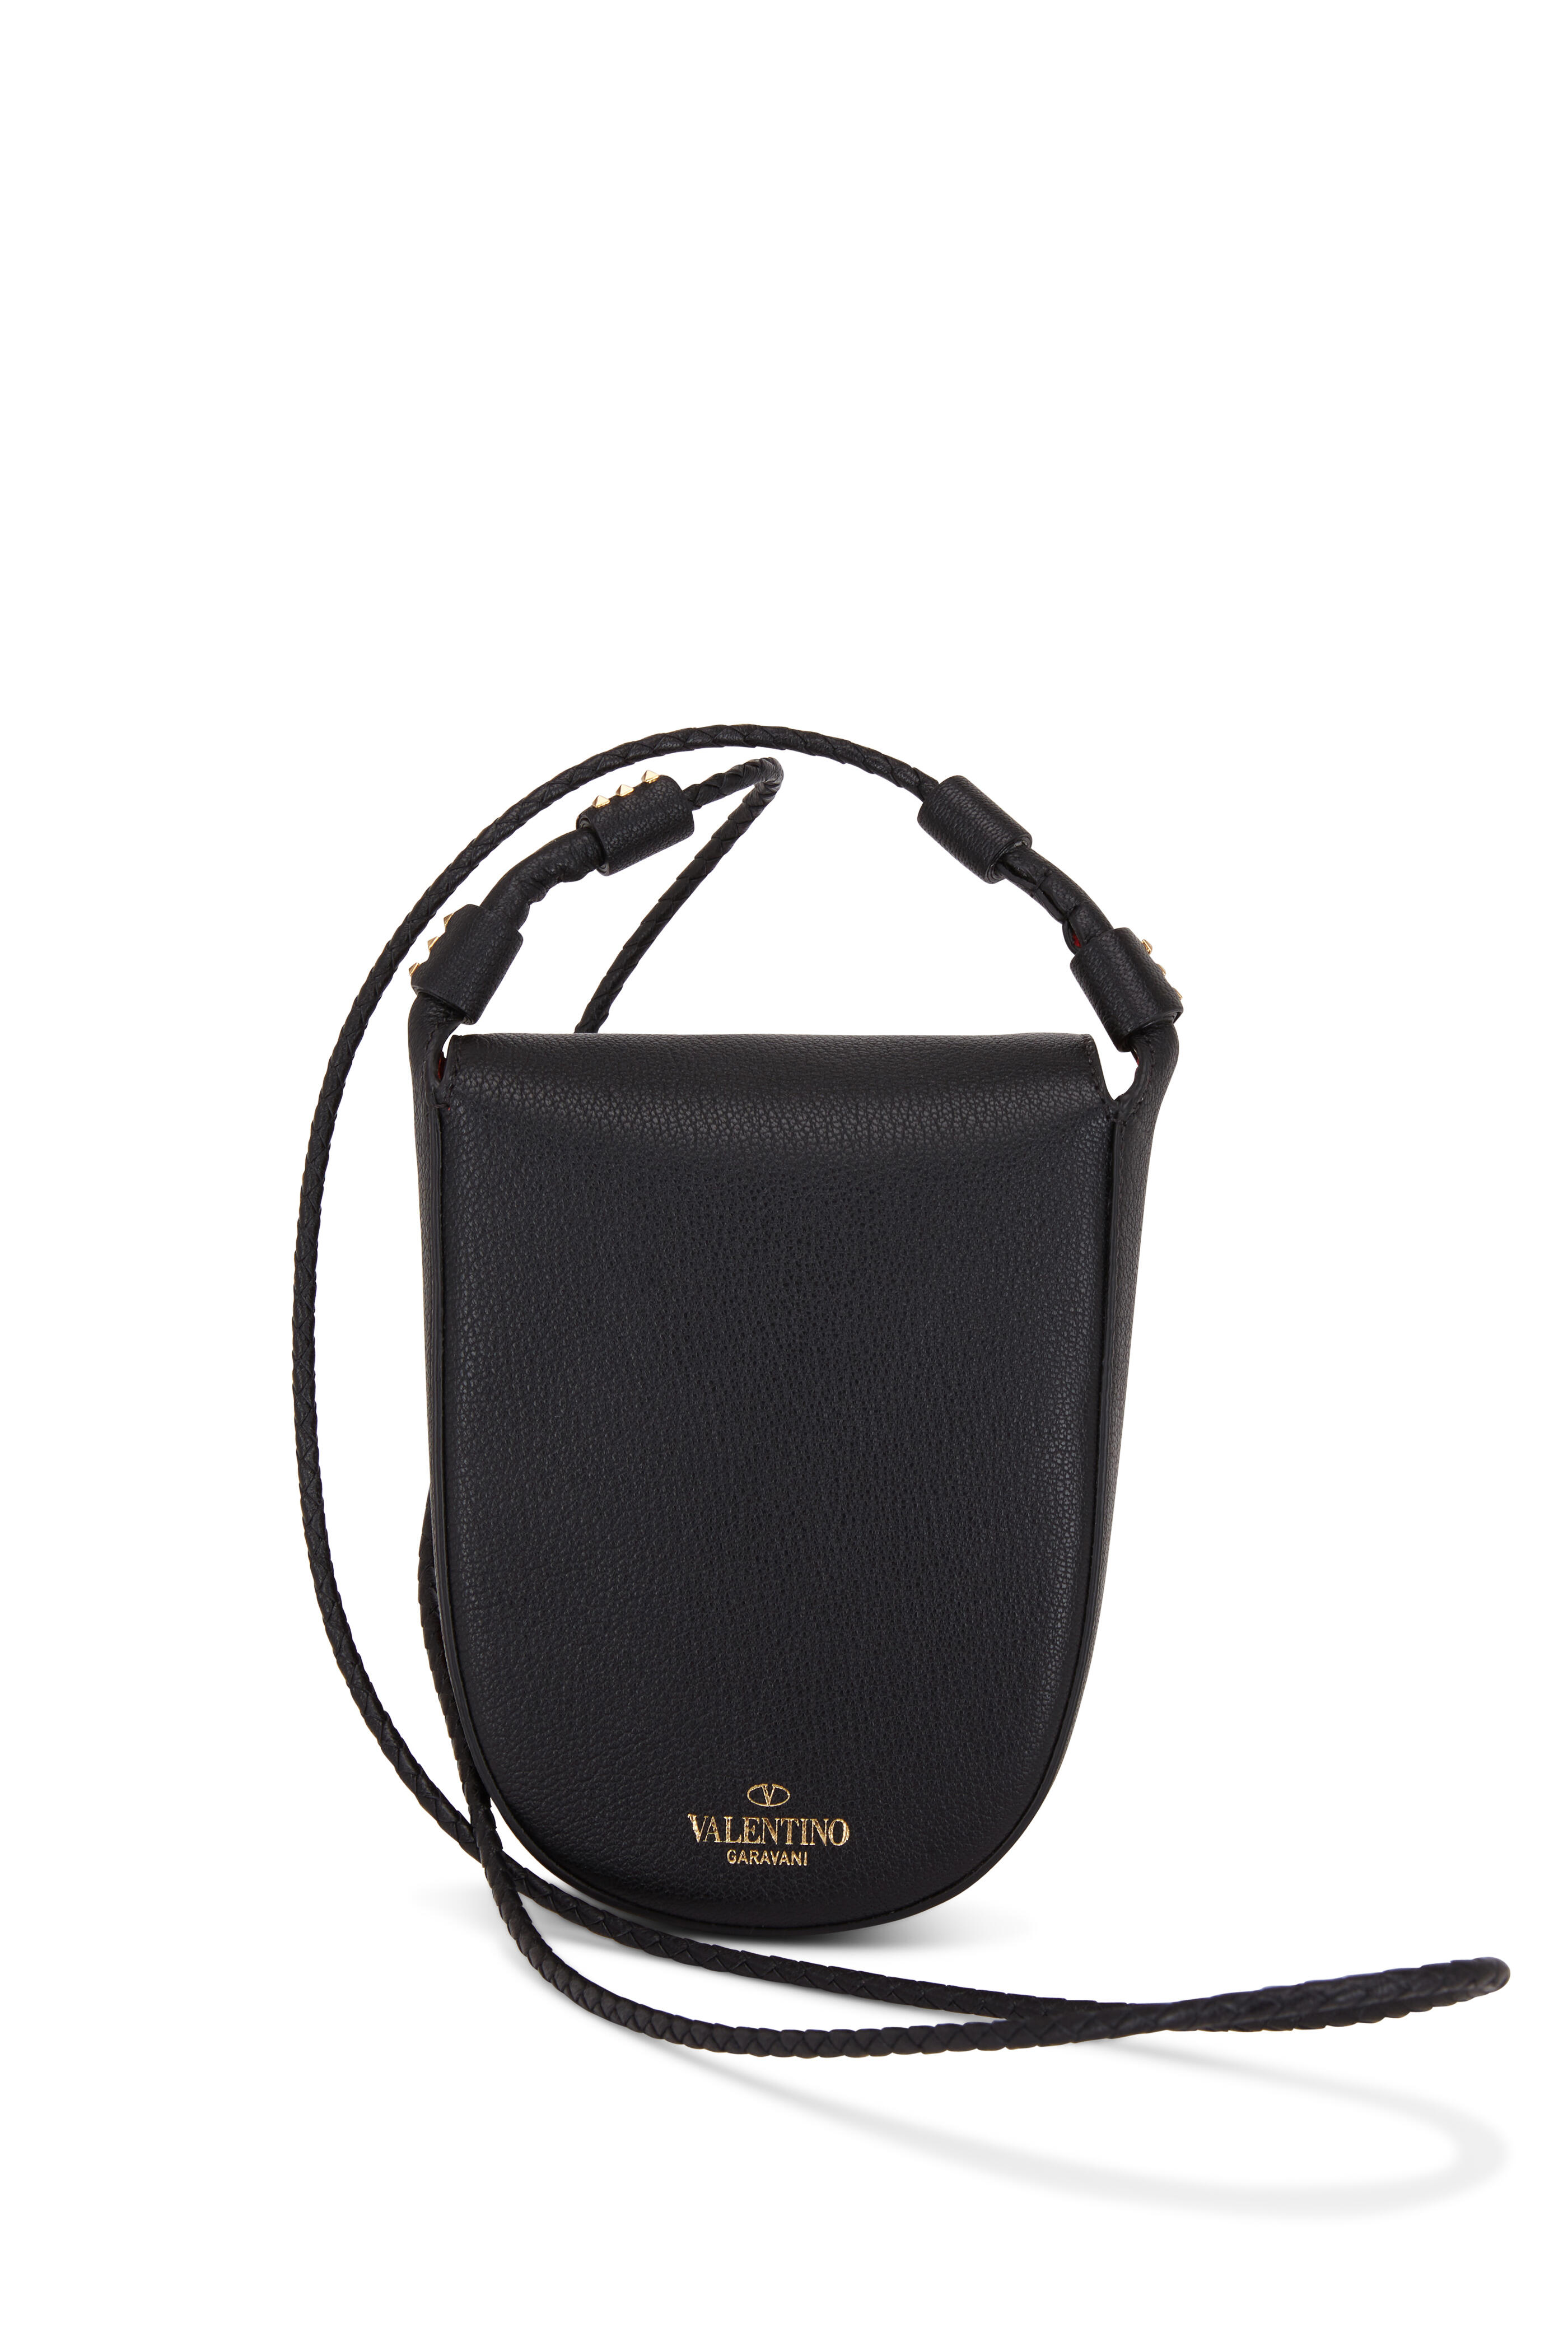 VALENTINO GARAVANI Pebbled Calfskin Small VRing Shoulder Bag Saddle Brown  1093369